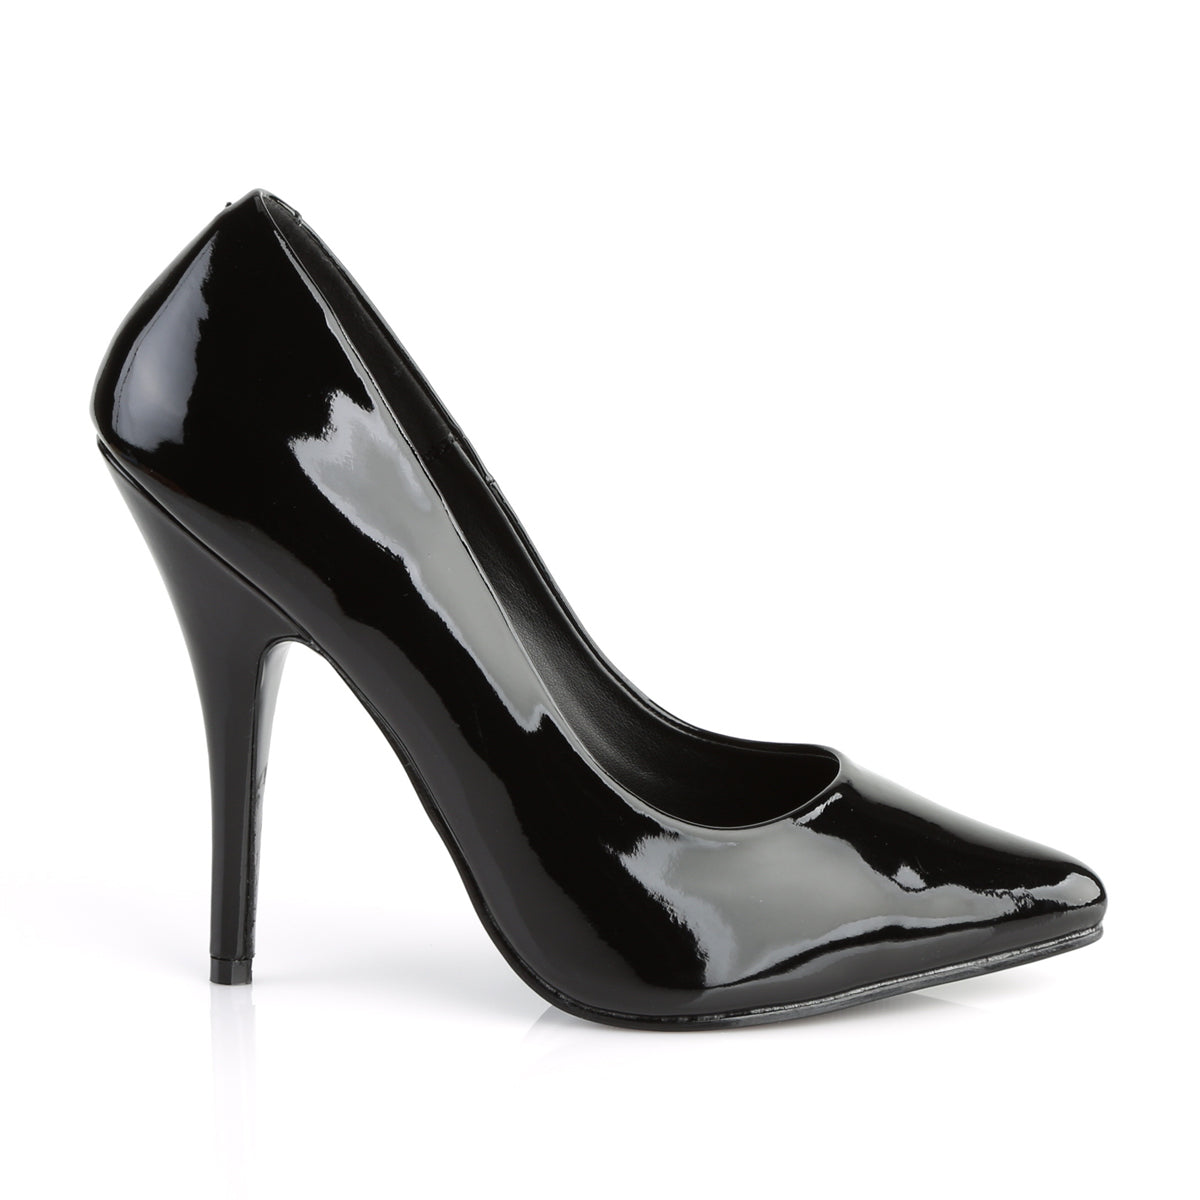 SEDUCE-420 Sexy Shoes 5" Heel Black Patent Fetish Footwear-Pleaser- Sexy Shoes Fetish Heels